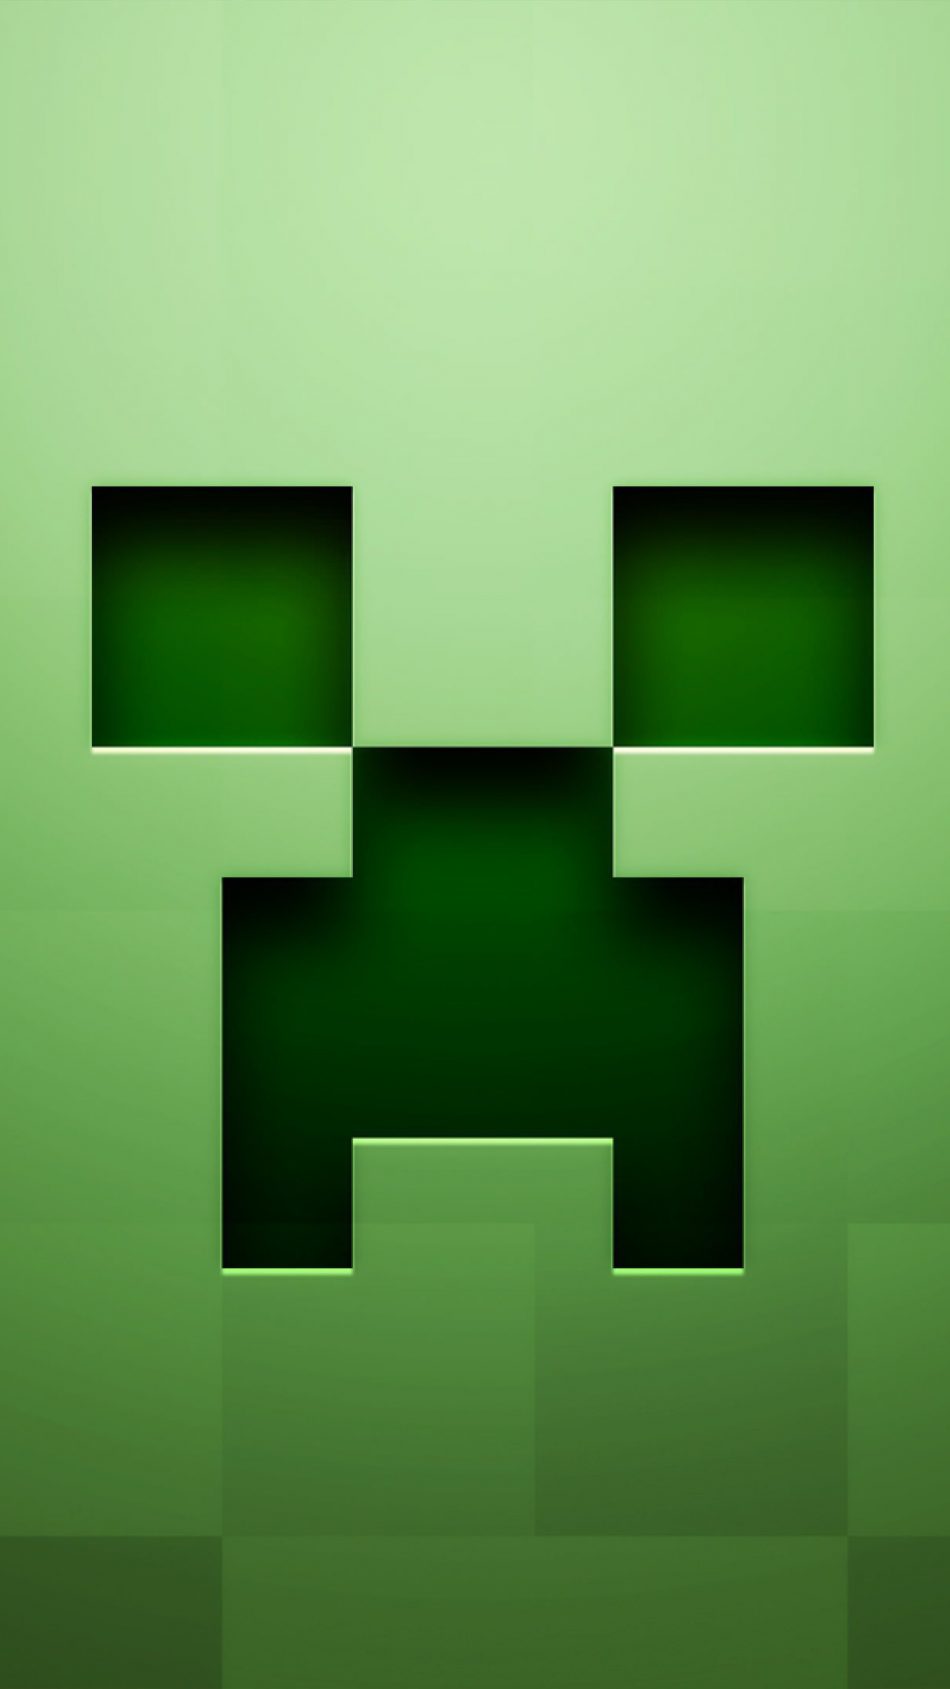 Minecraft Creeper Green Background 4K Ultra HD Mobile Wallpaper